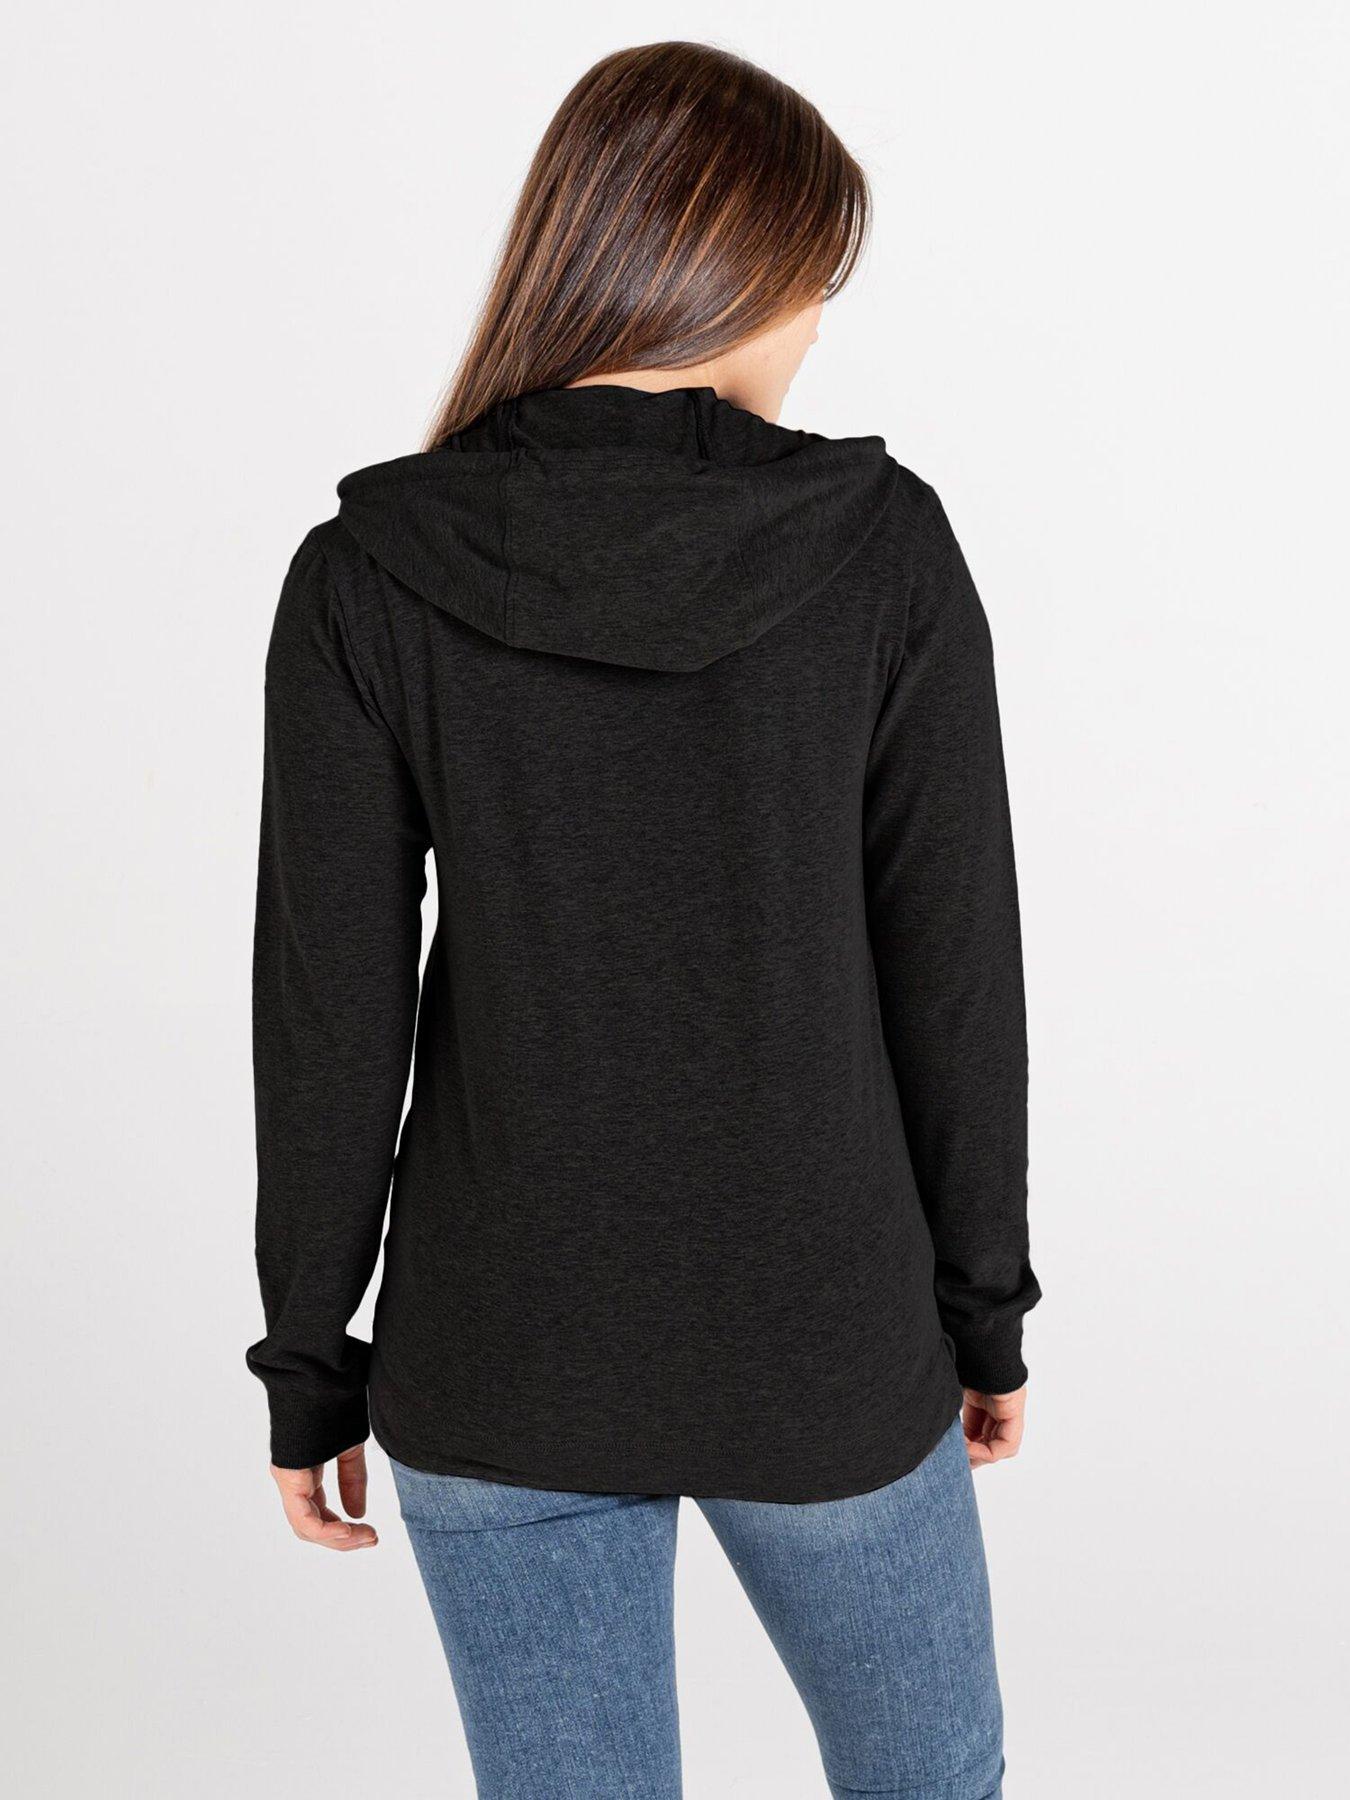 Hoodies & Sweatshirts Laura Whitmore Influence Zip Through Hoodie - Black